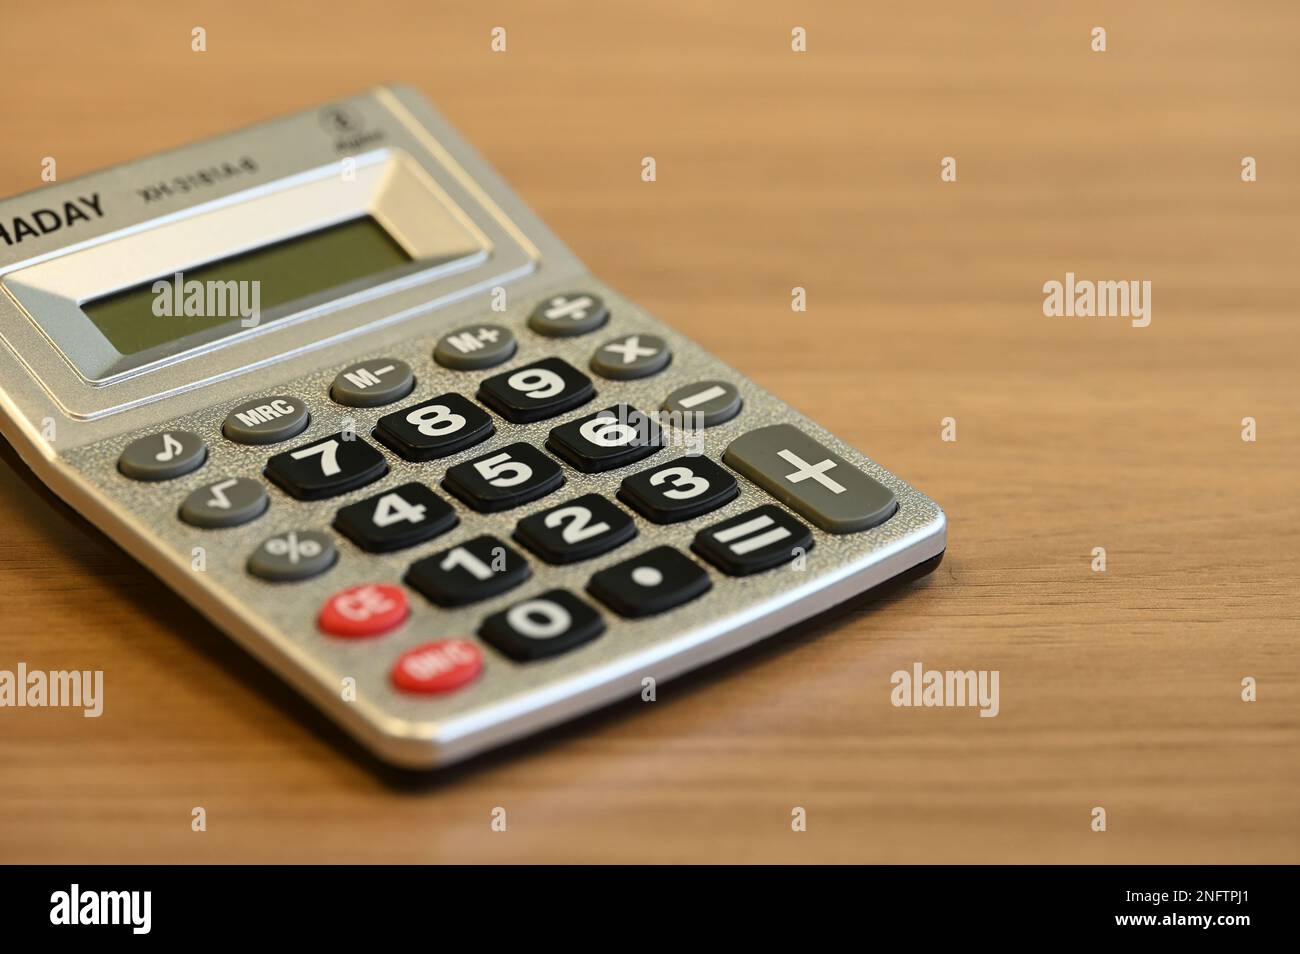 An office calculator Stock Photo